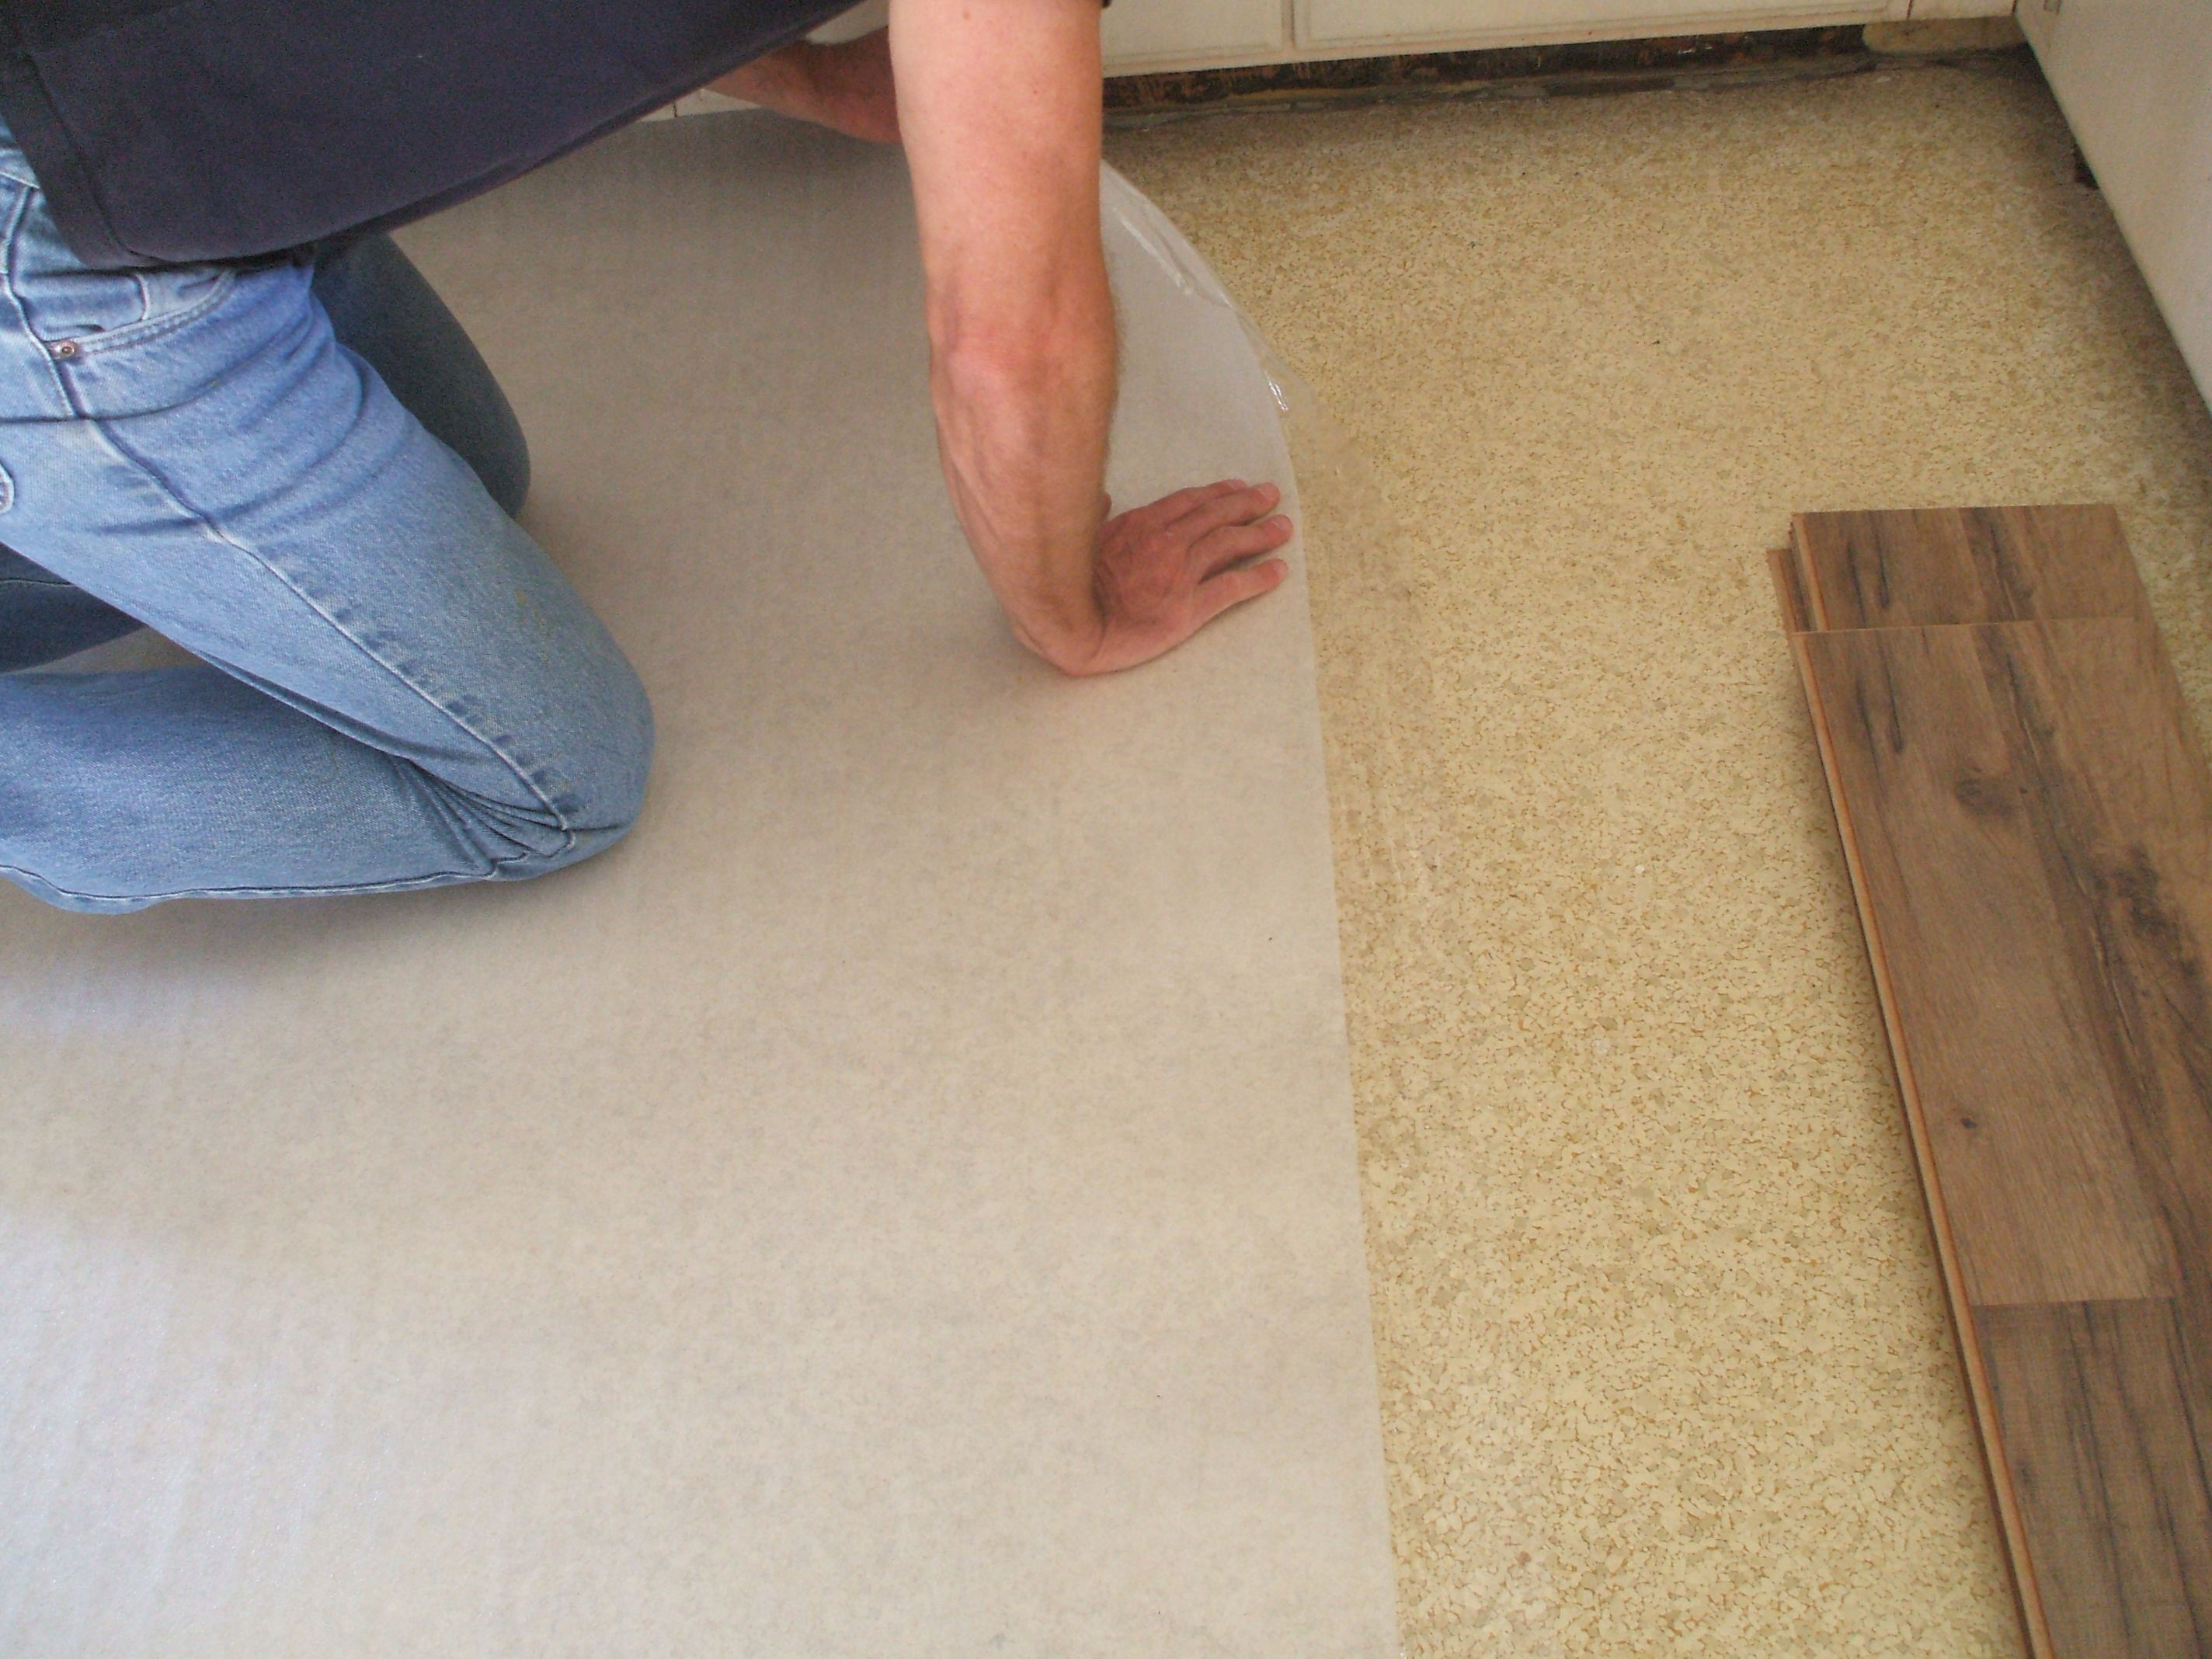 install hardwood floor 45 degree angle of laminate flooring installation made easy regarding installing laminate putting down underlayment 56a49e445f9b58b7d0d7dddd jpg